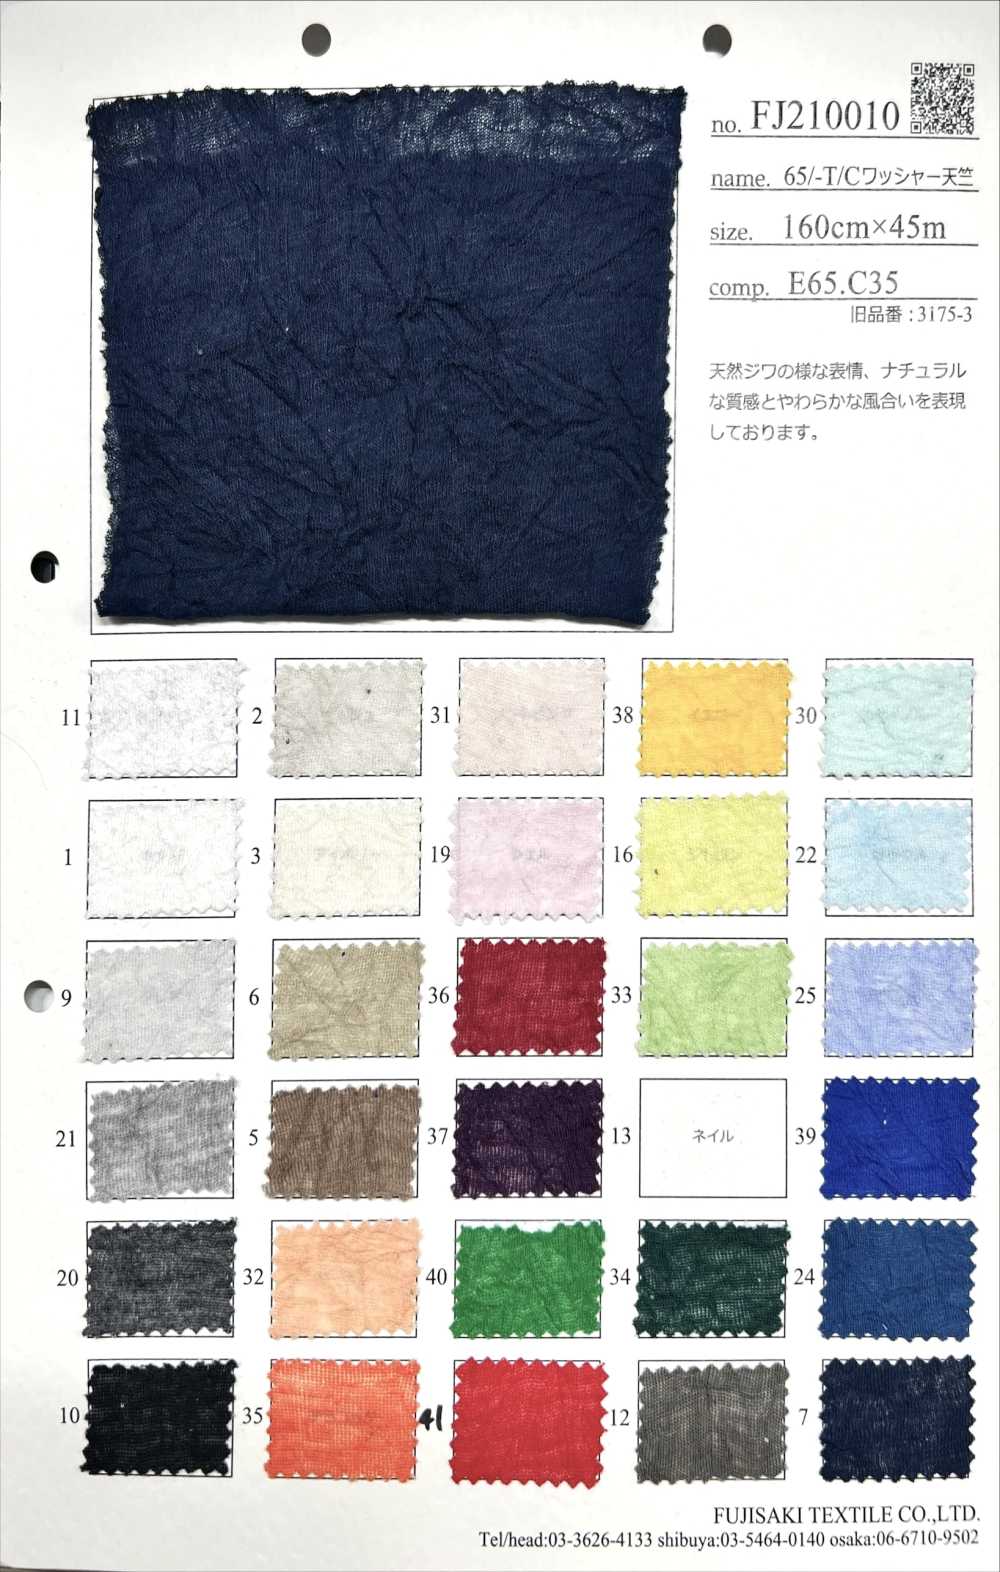 FJ210010 65/-T/C Washer Processed Jersey[Textile / Fabric] Fujisaki Textile